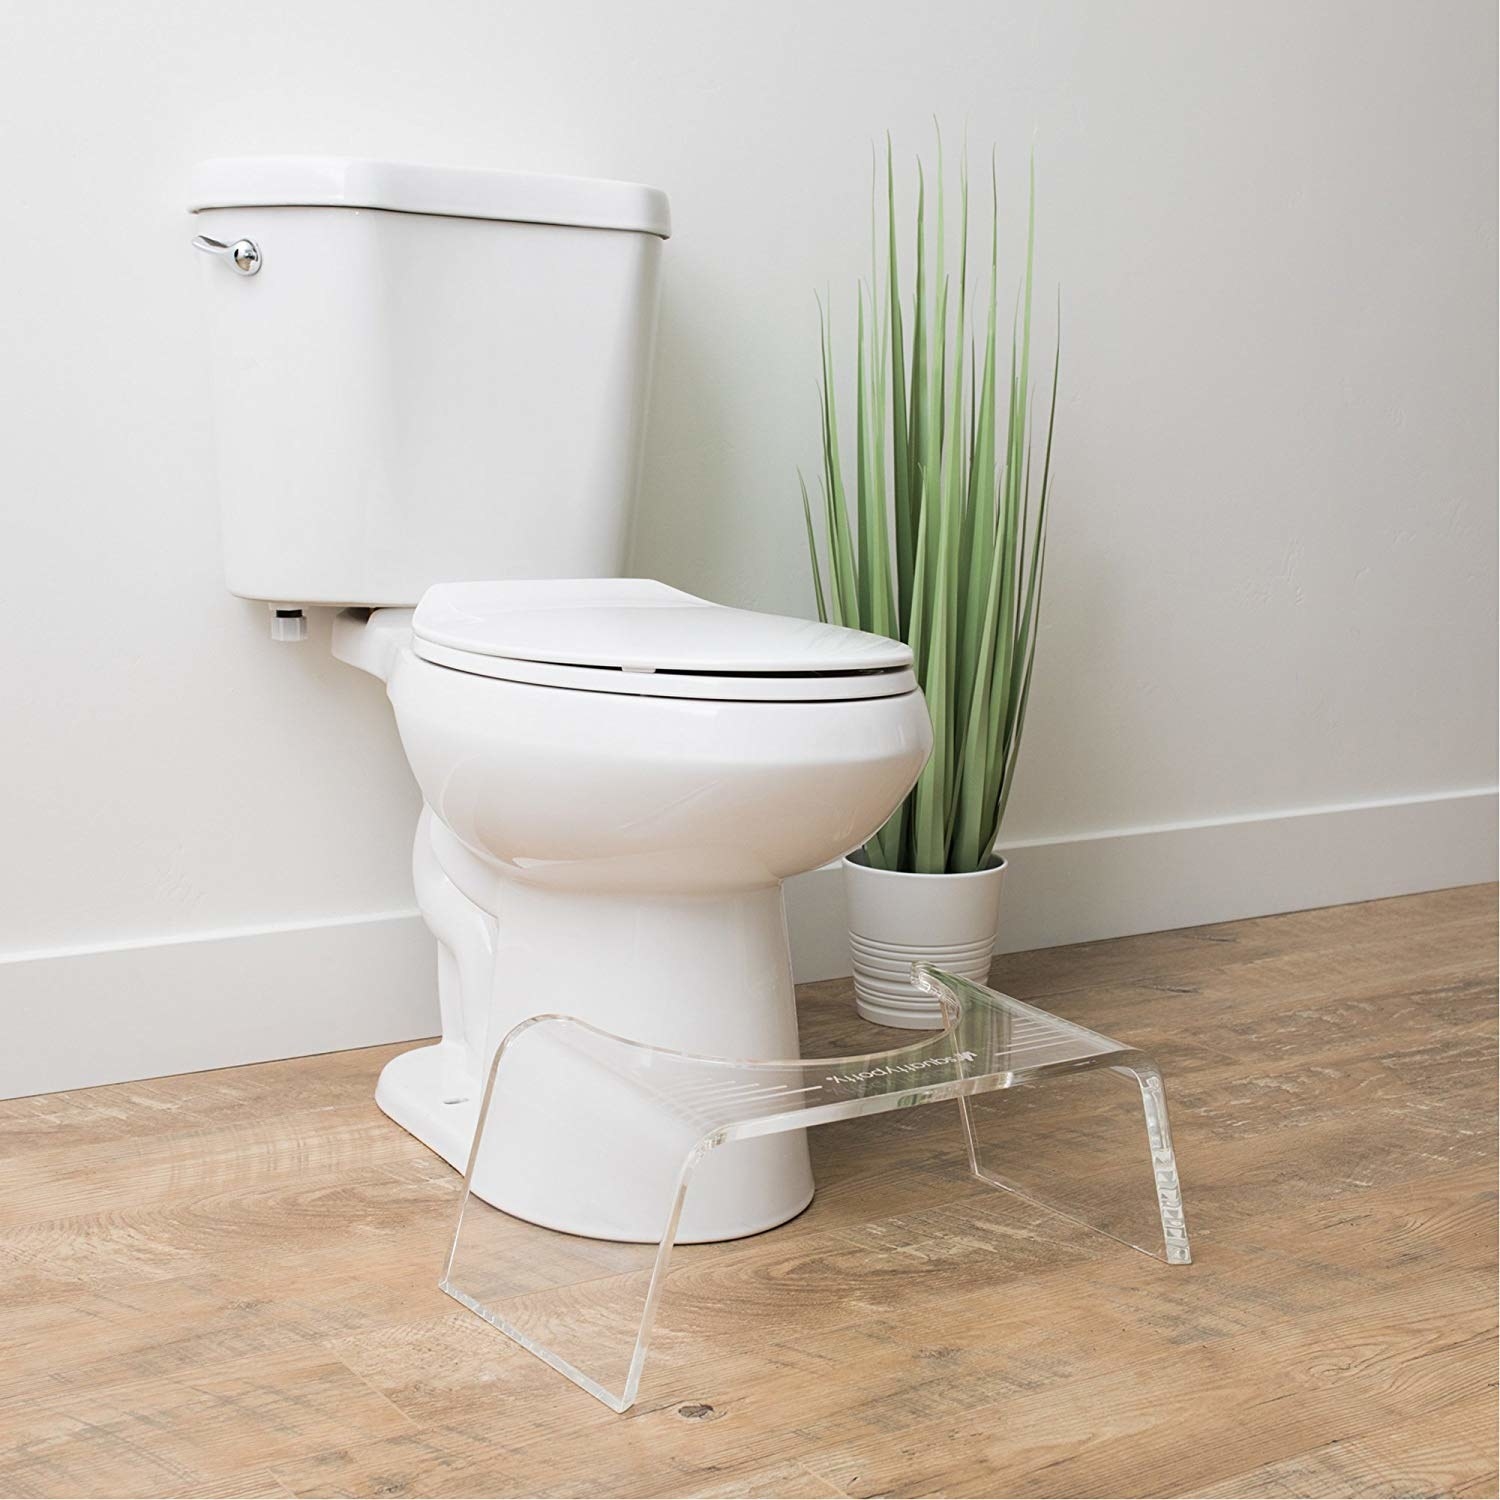 Squatty potty stool on floor in bathroom